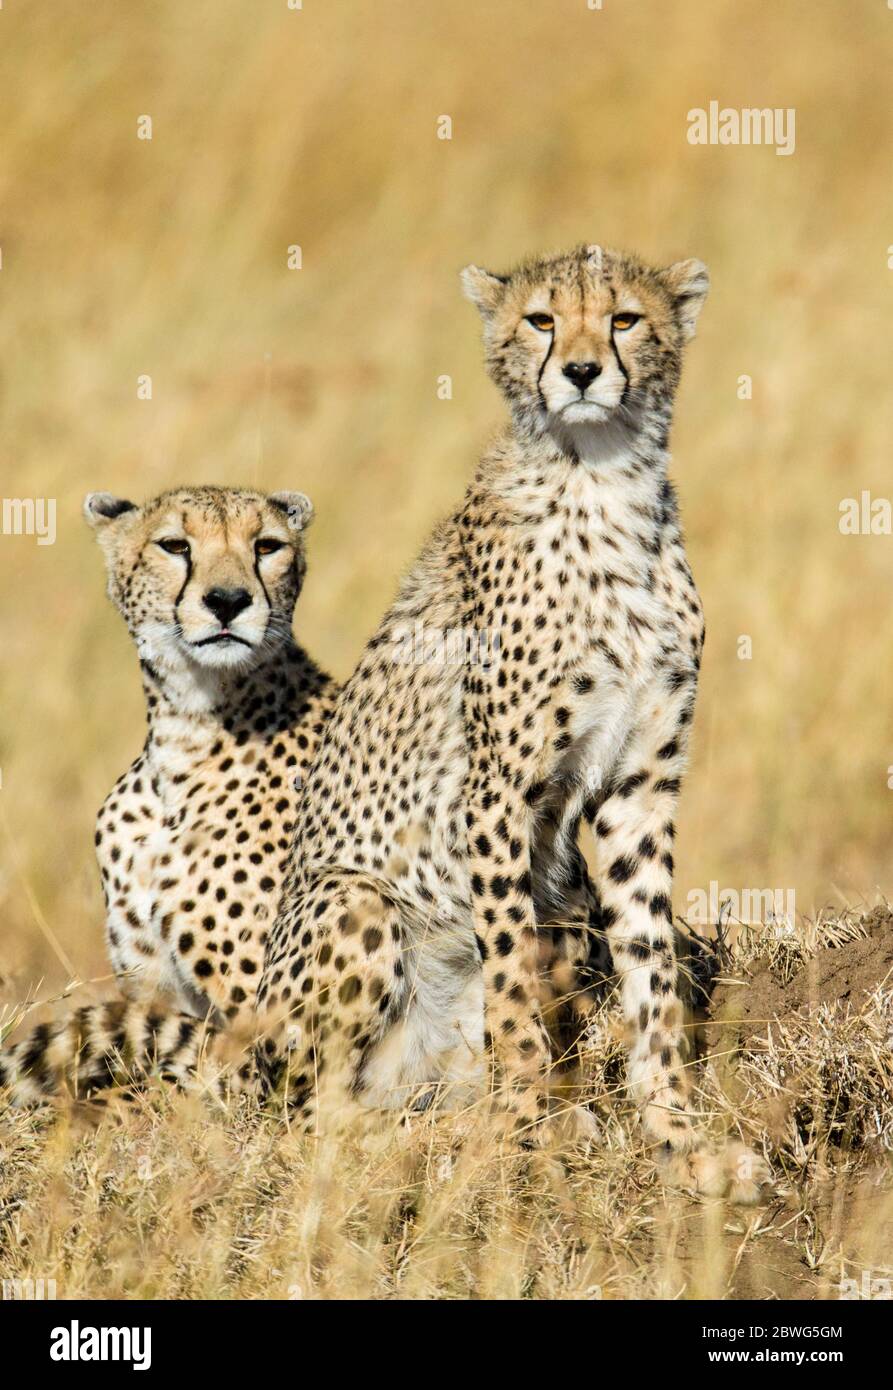 Zwei Geparden (Acinonyx jubatus), die sich die Kamera angucken, Serengeti Nationalpark, Tansania, Afrika, Afrika Stockfoto